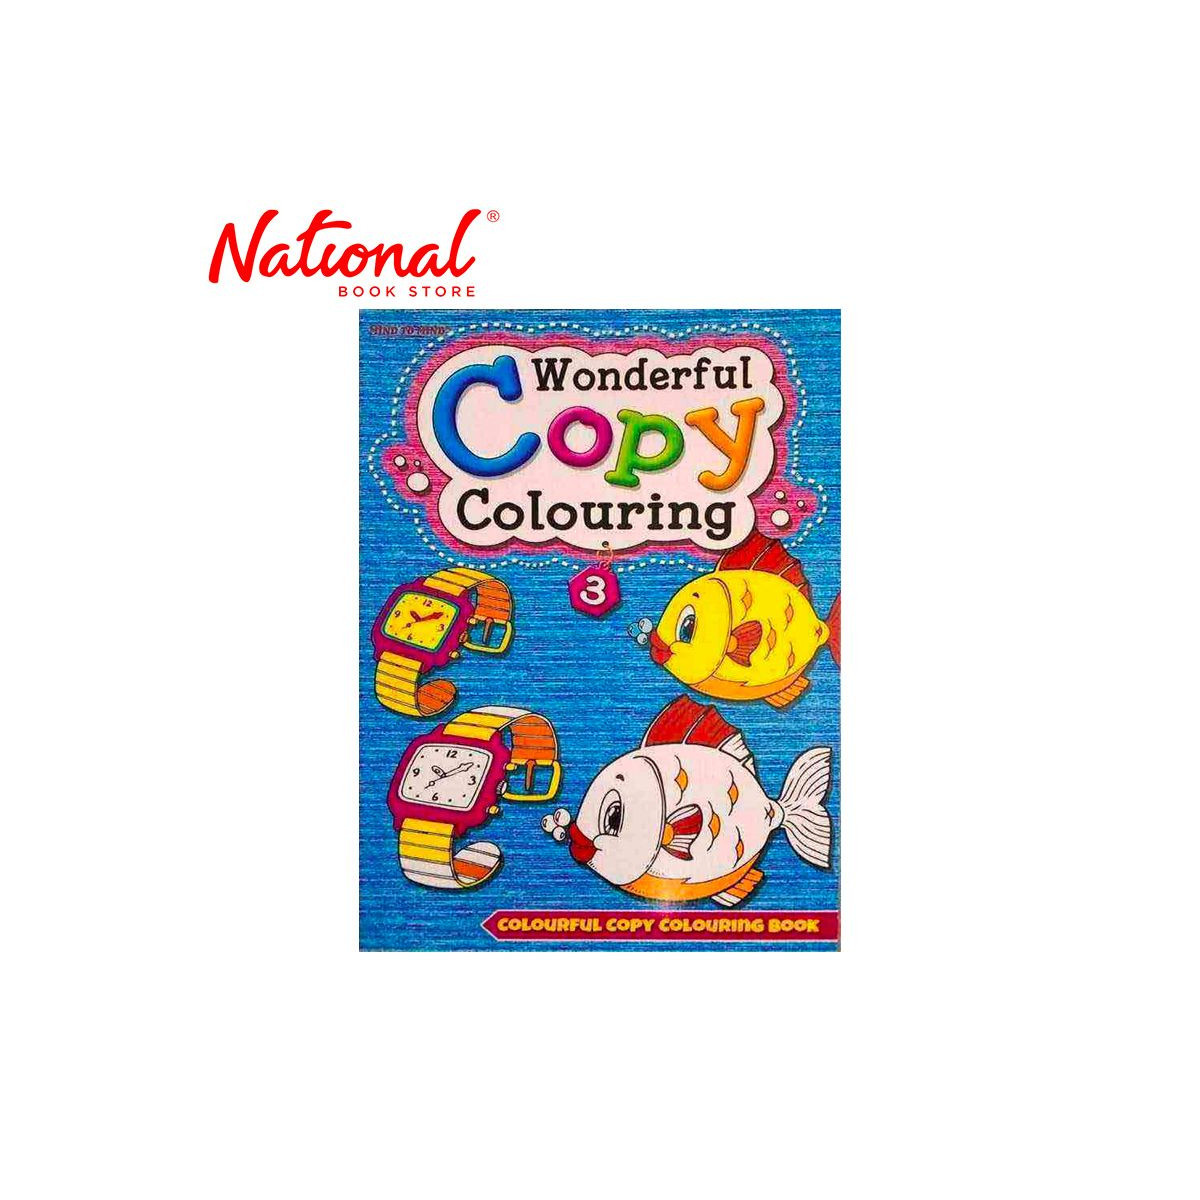 Wonderful Copy Colouring Book 3 Trade Paperback - Kids Activity Workbooks